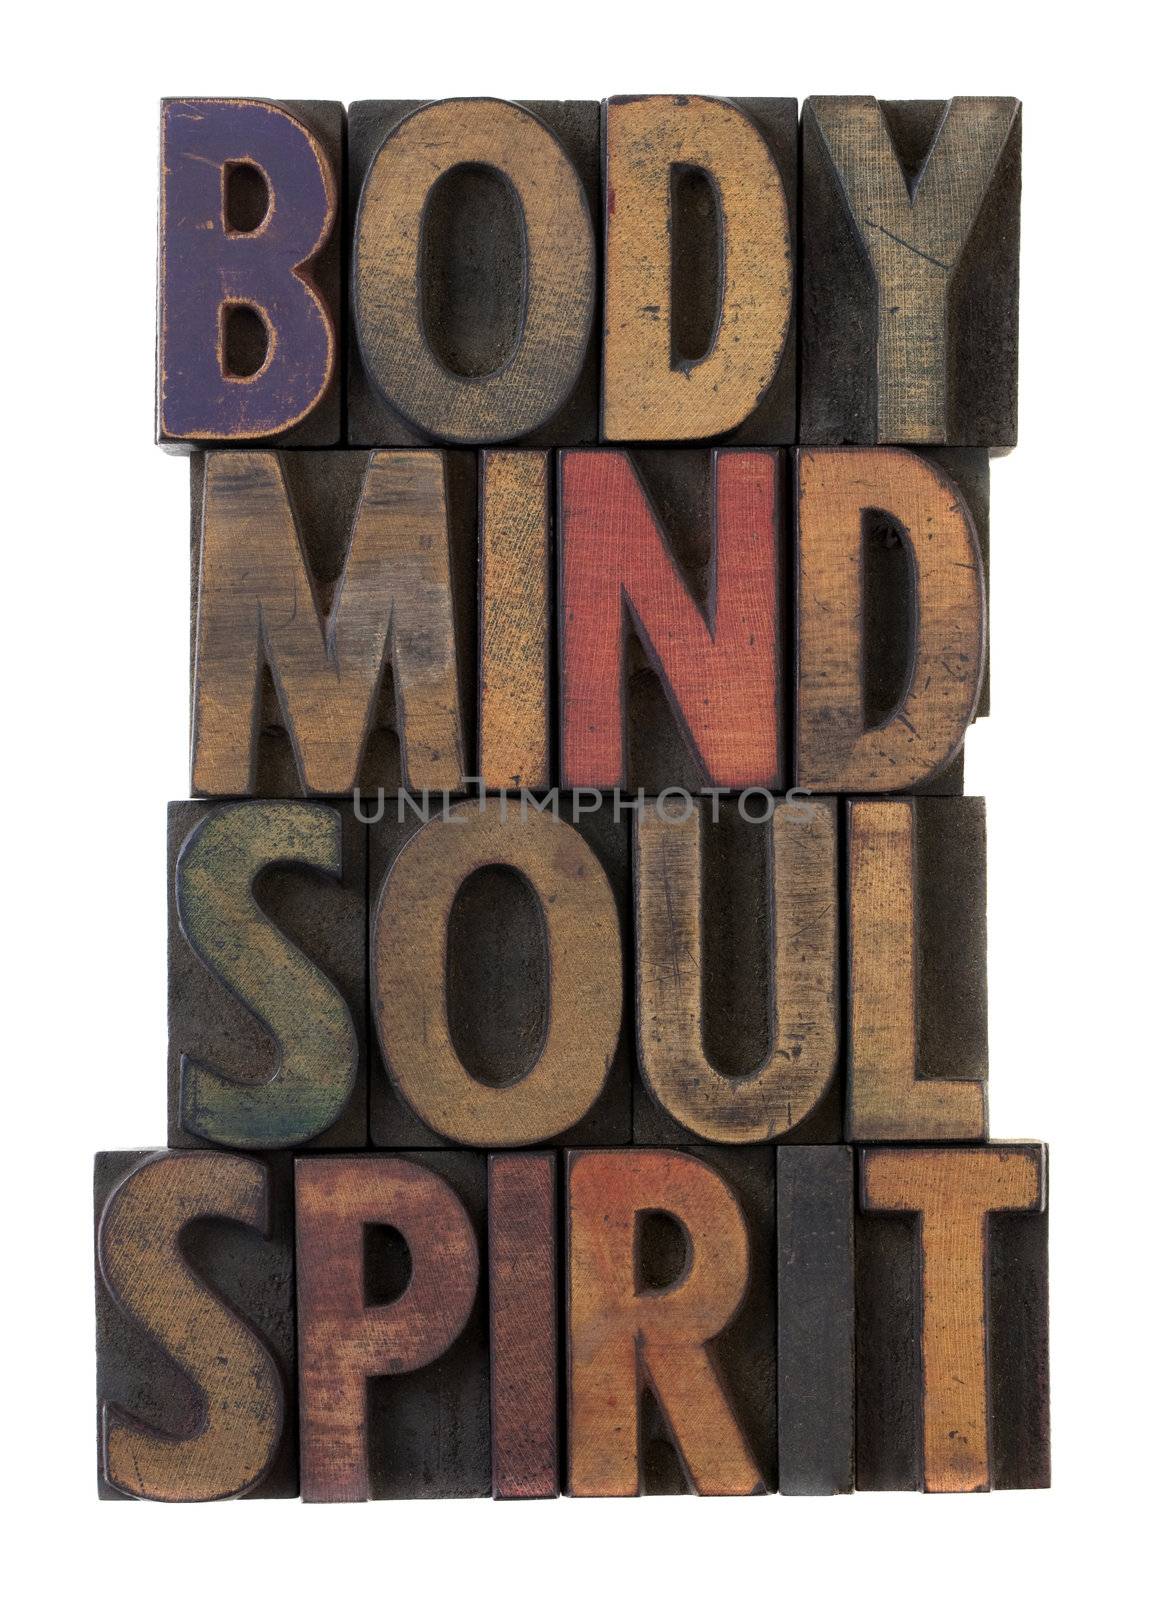 body, mind, soul, spirit in old wood type by PixelsAway